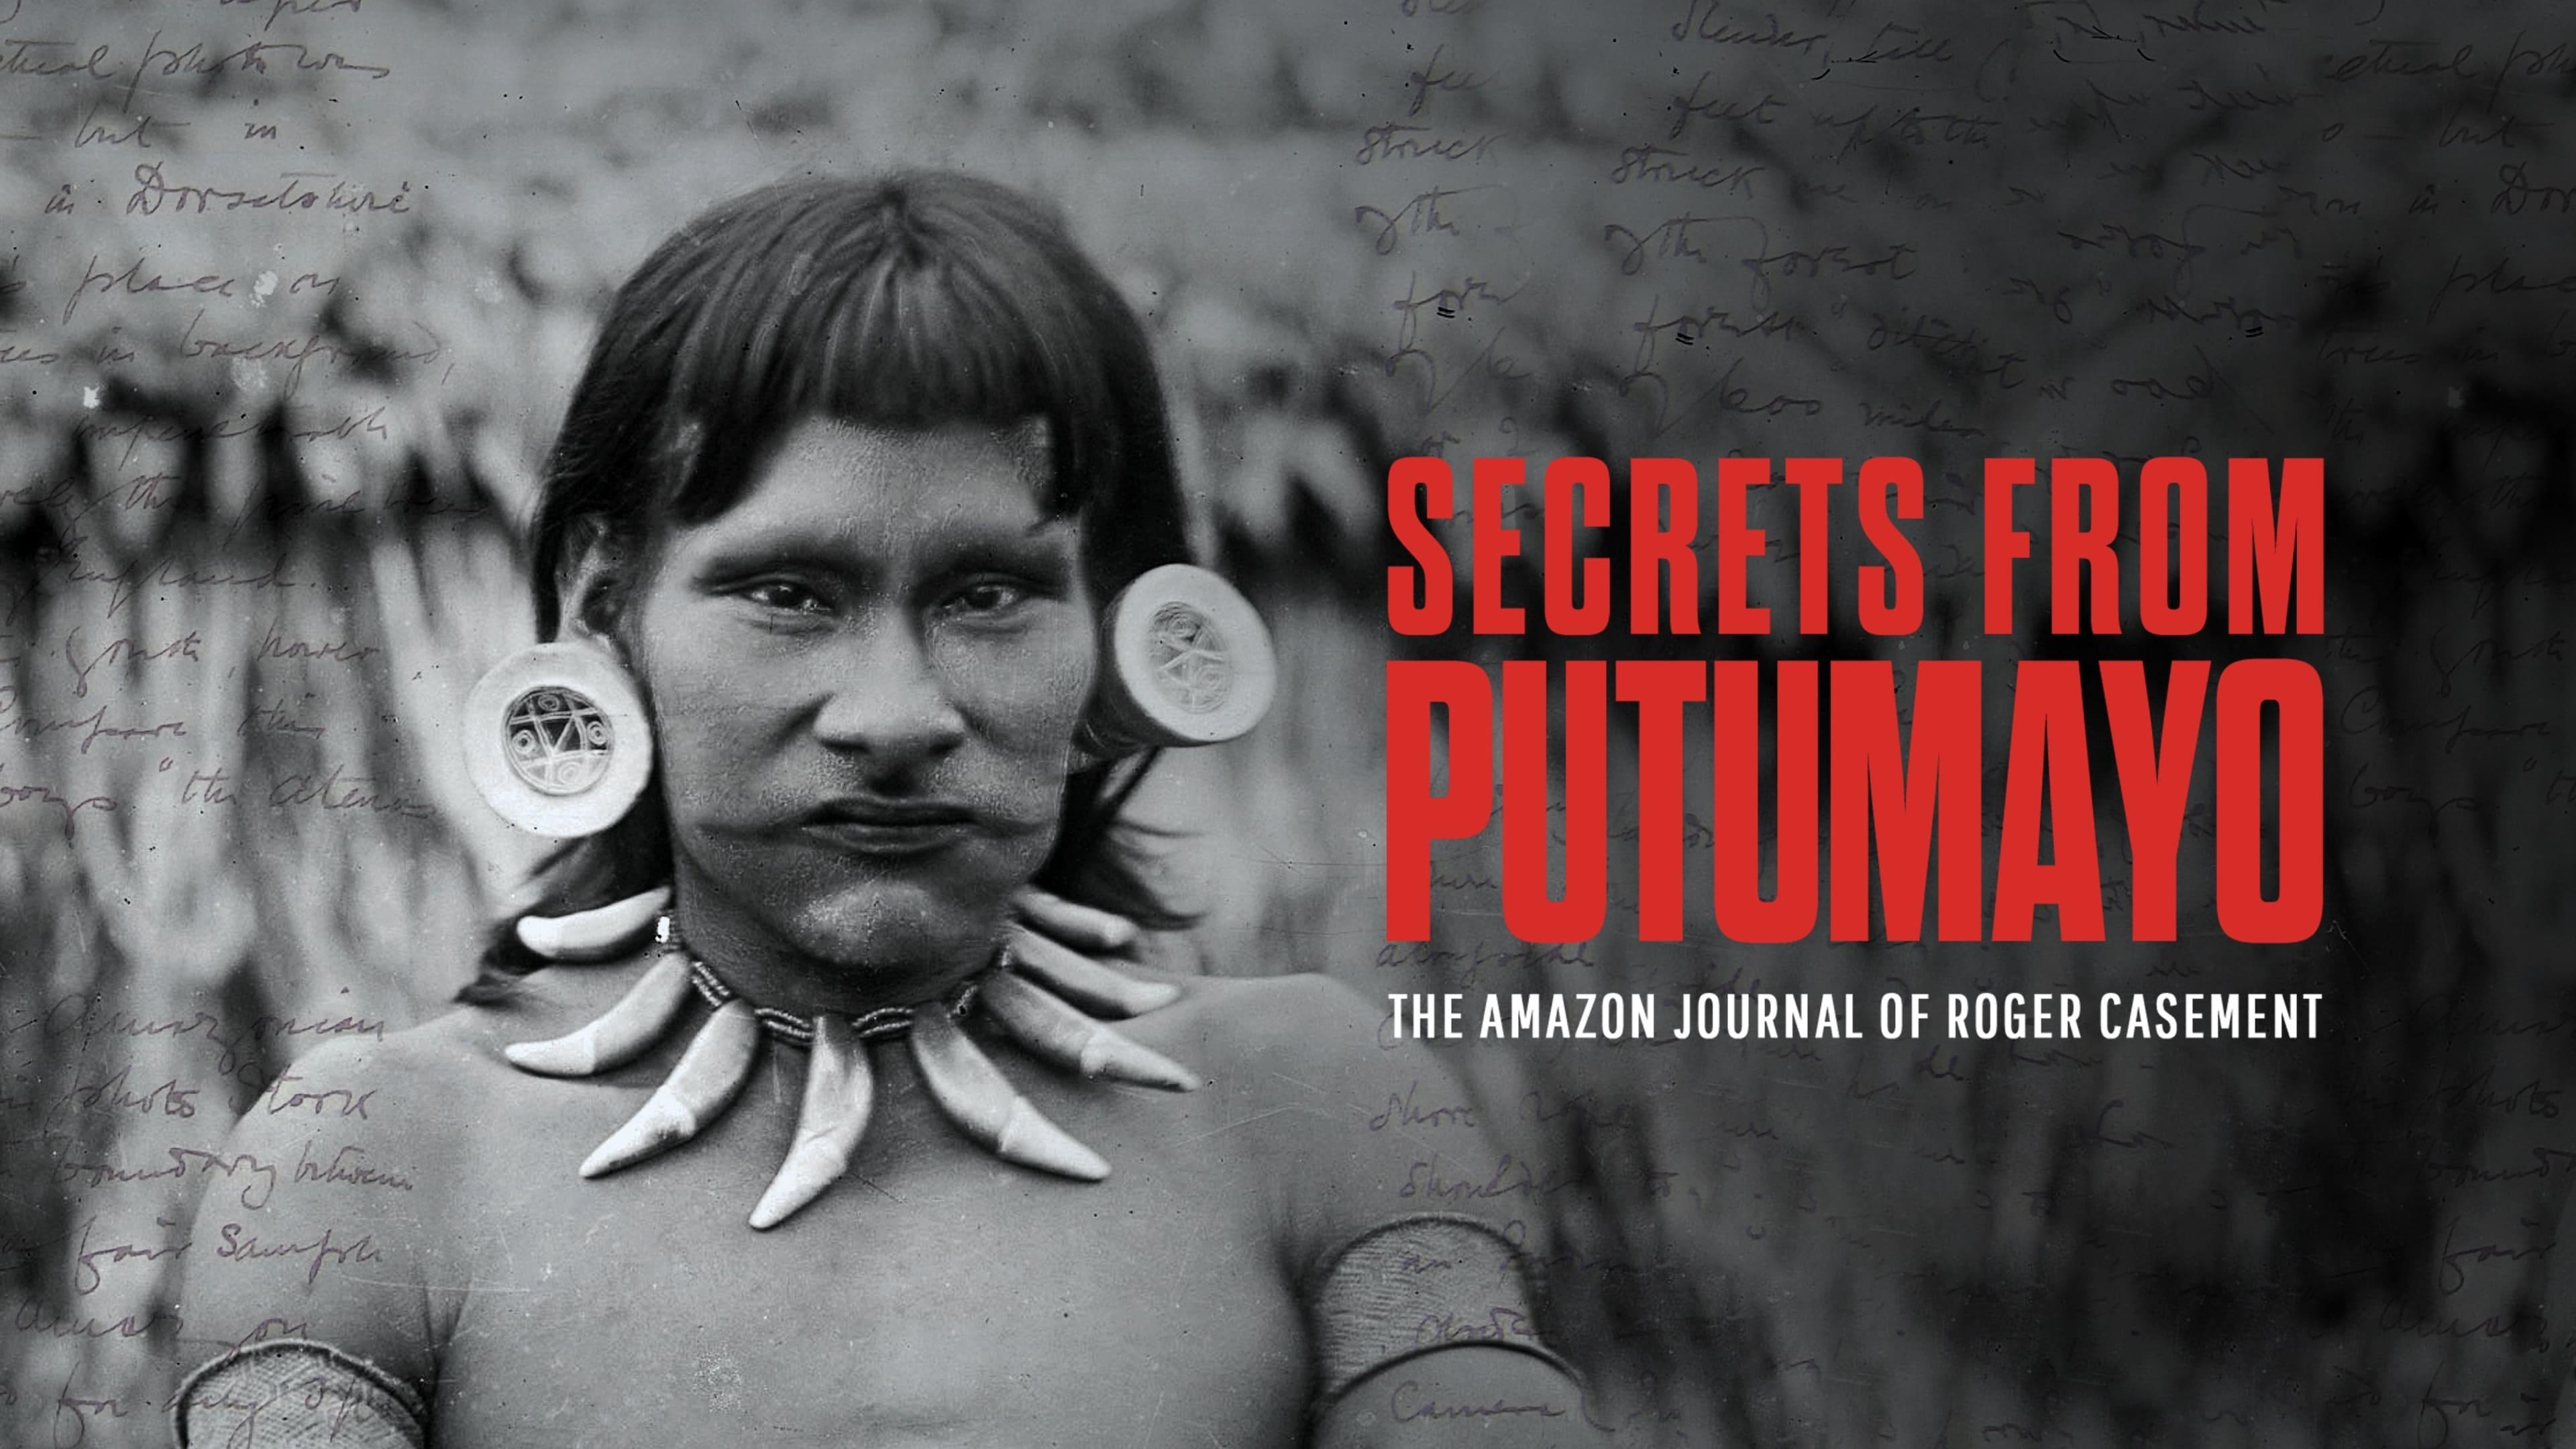 Secrets from Putumayo backdrop